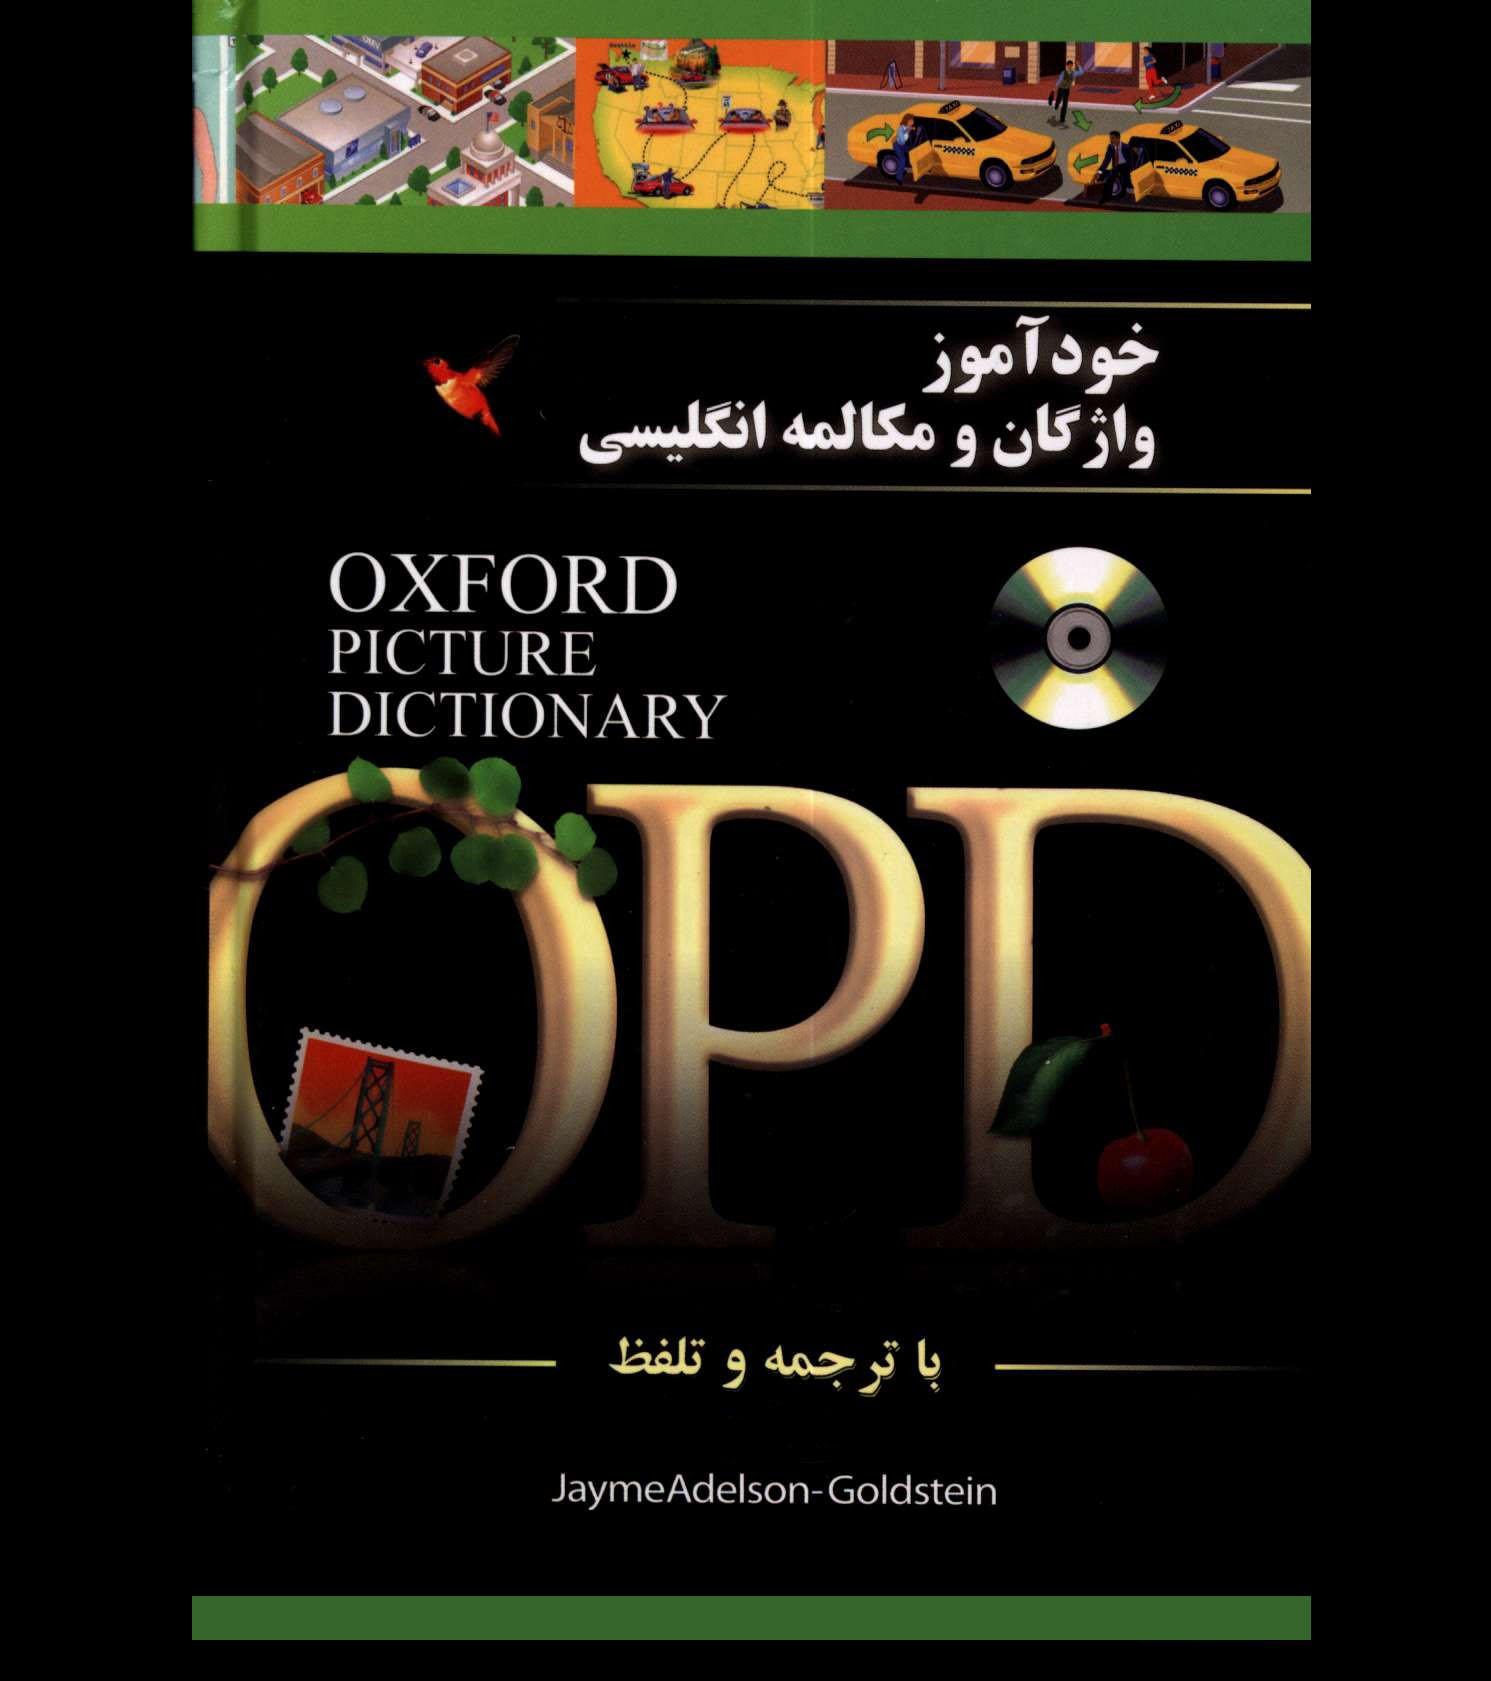 PDFخود آموز لغات و مکالمه انگلیسی با ترجمه وتلفظ آکسفورد پیکچر دیکشنریOxford Picture Dictionary (OPD)